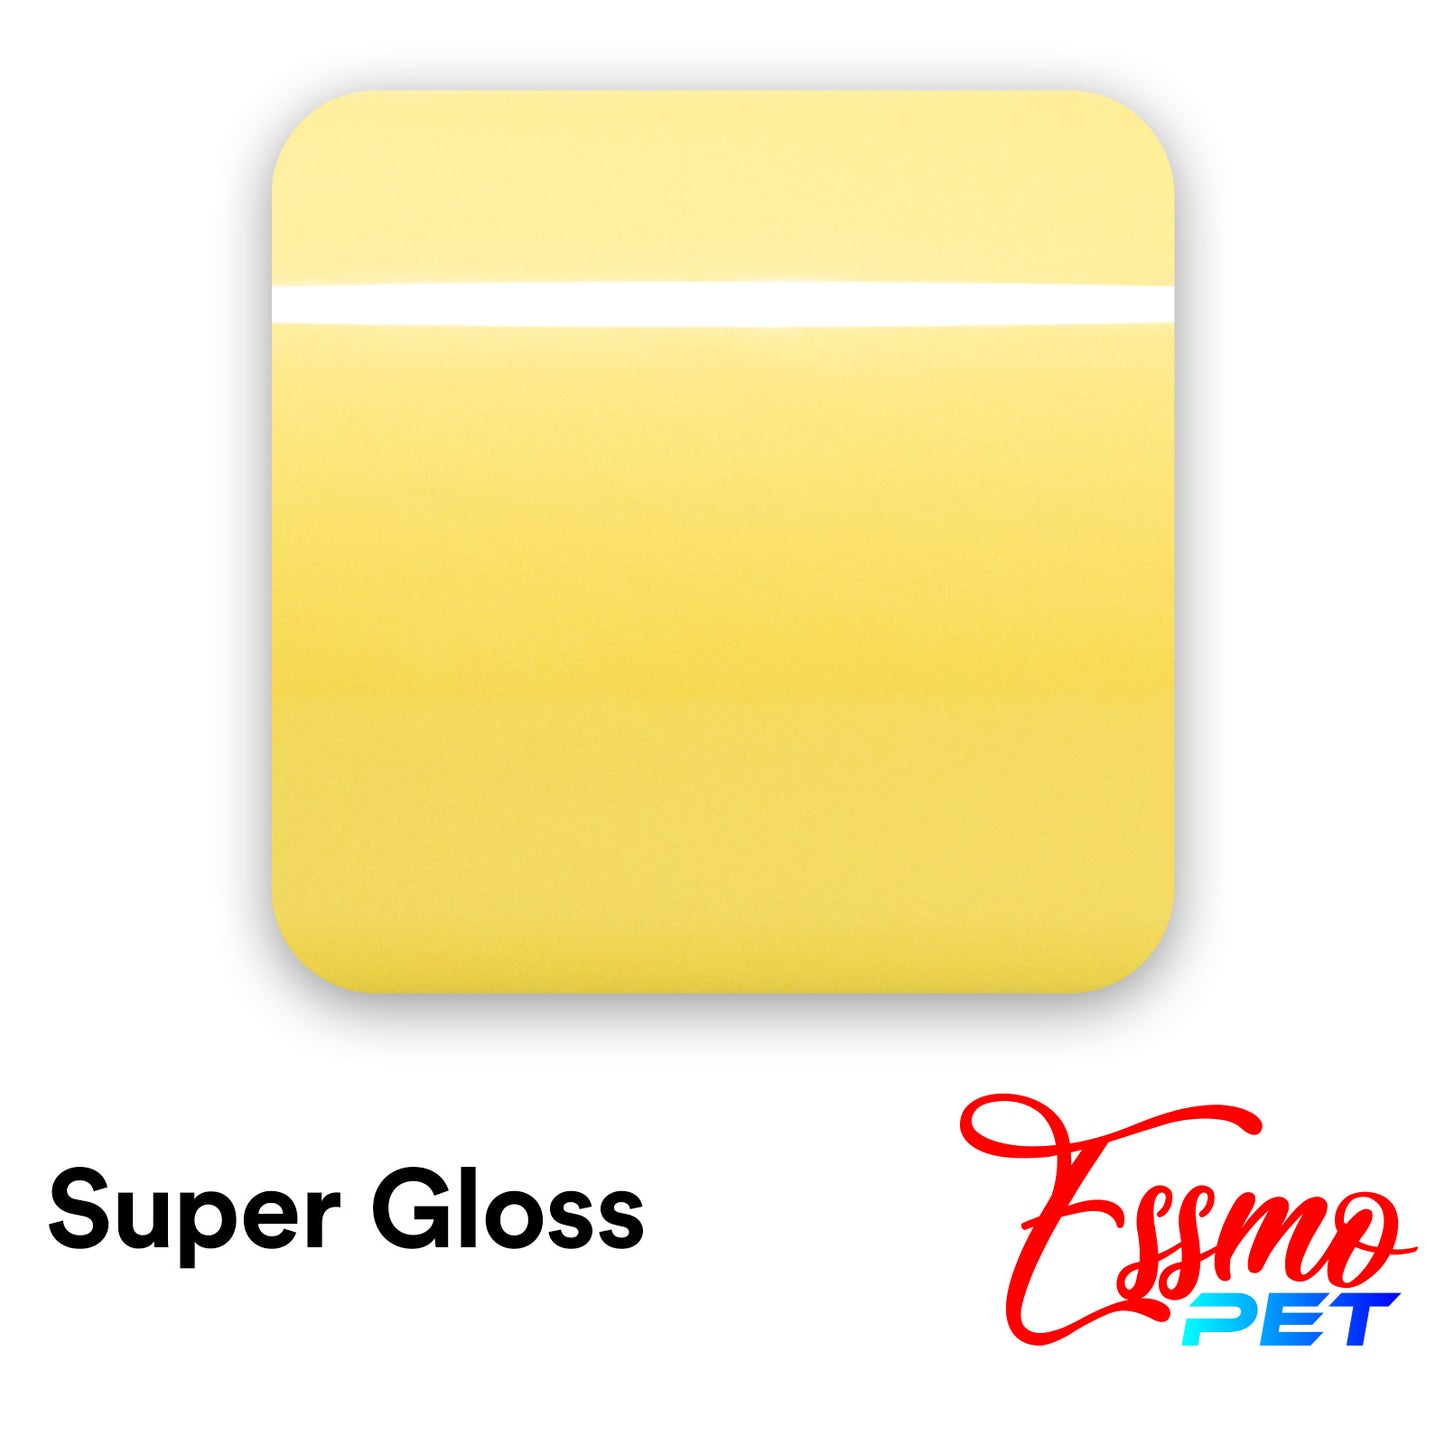 PET Liner Super Gloss Crystal Red Car Wrap PET7007